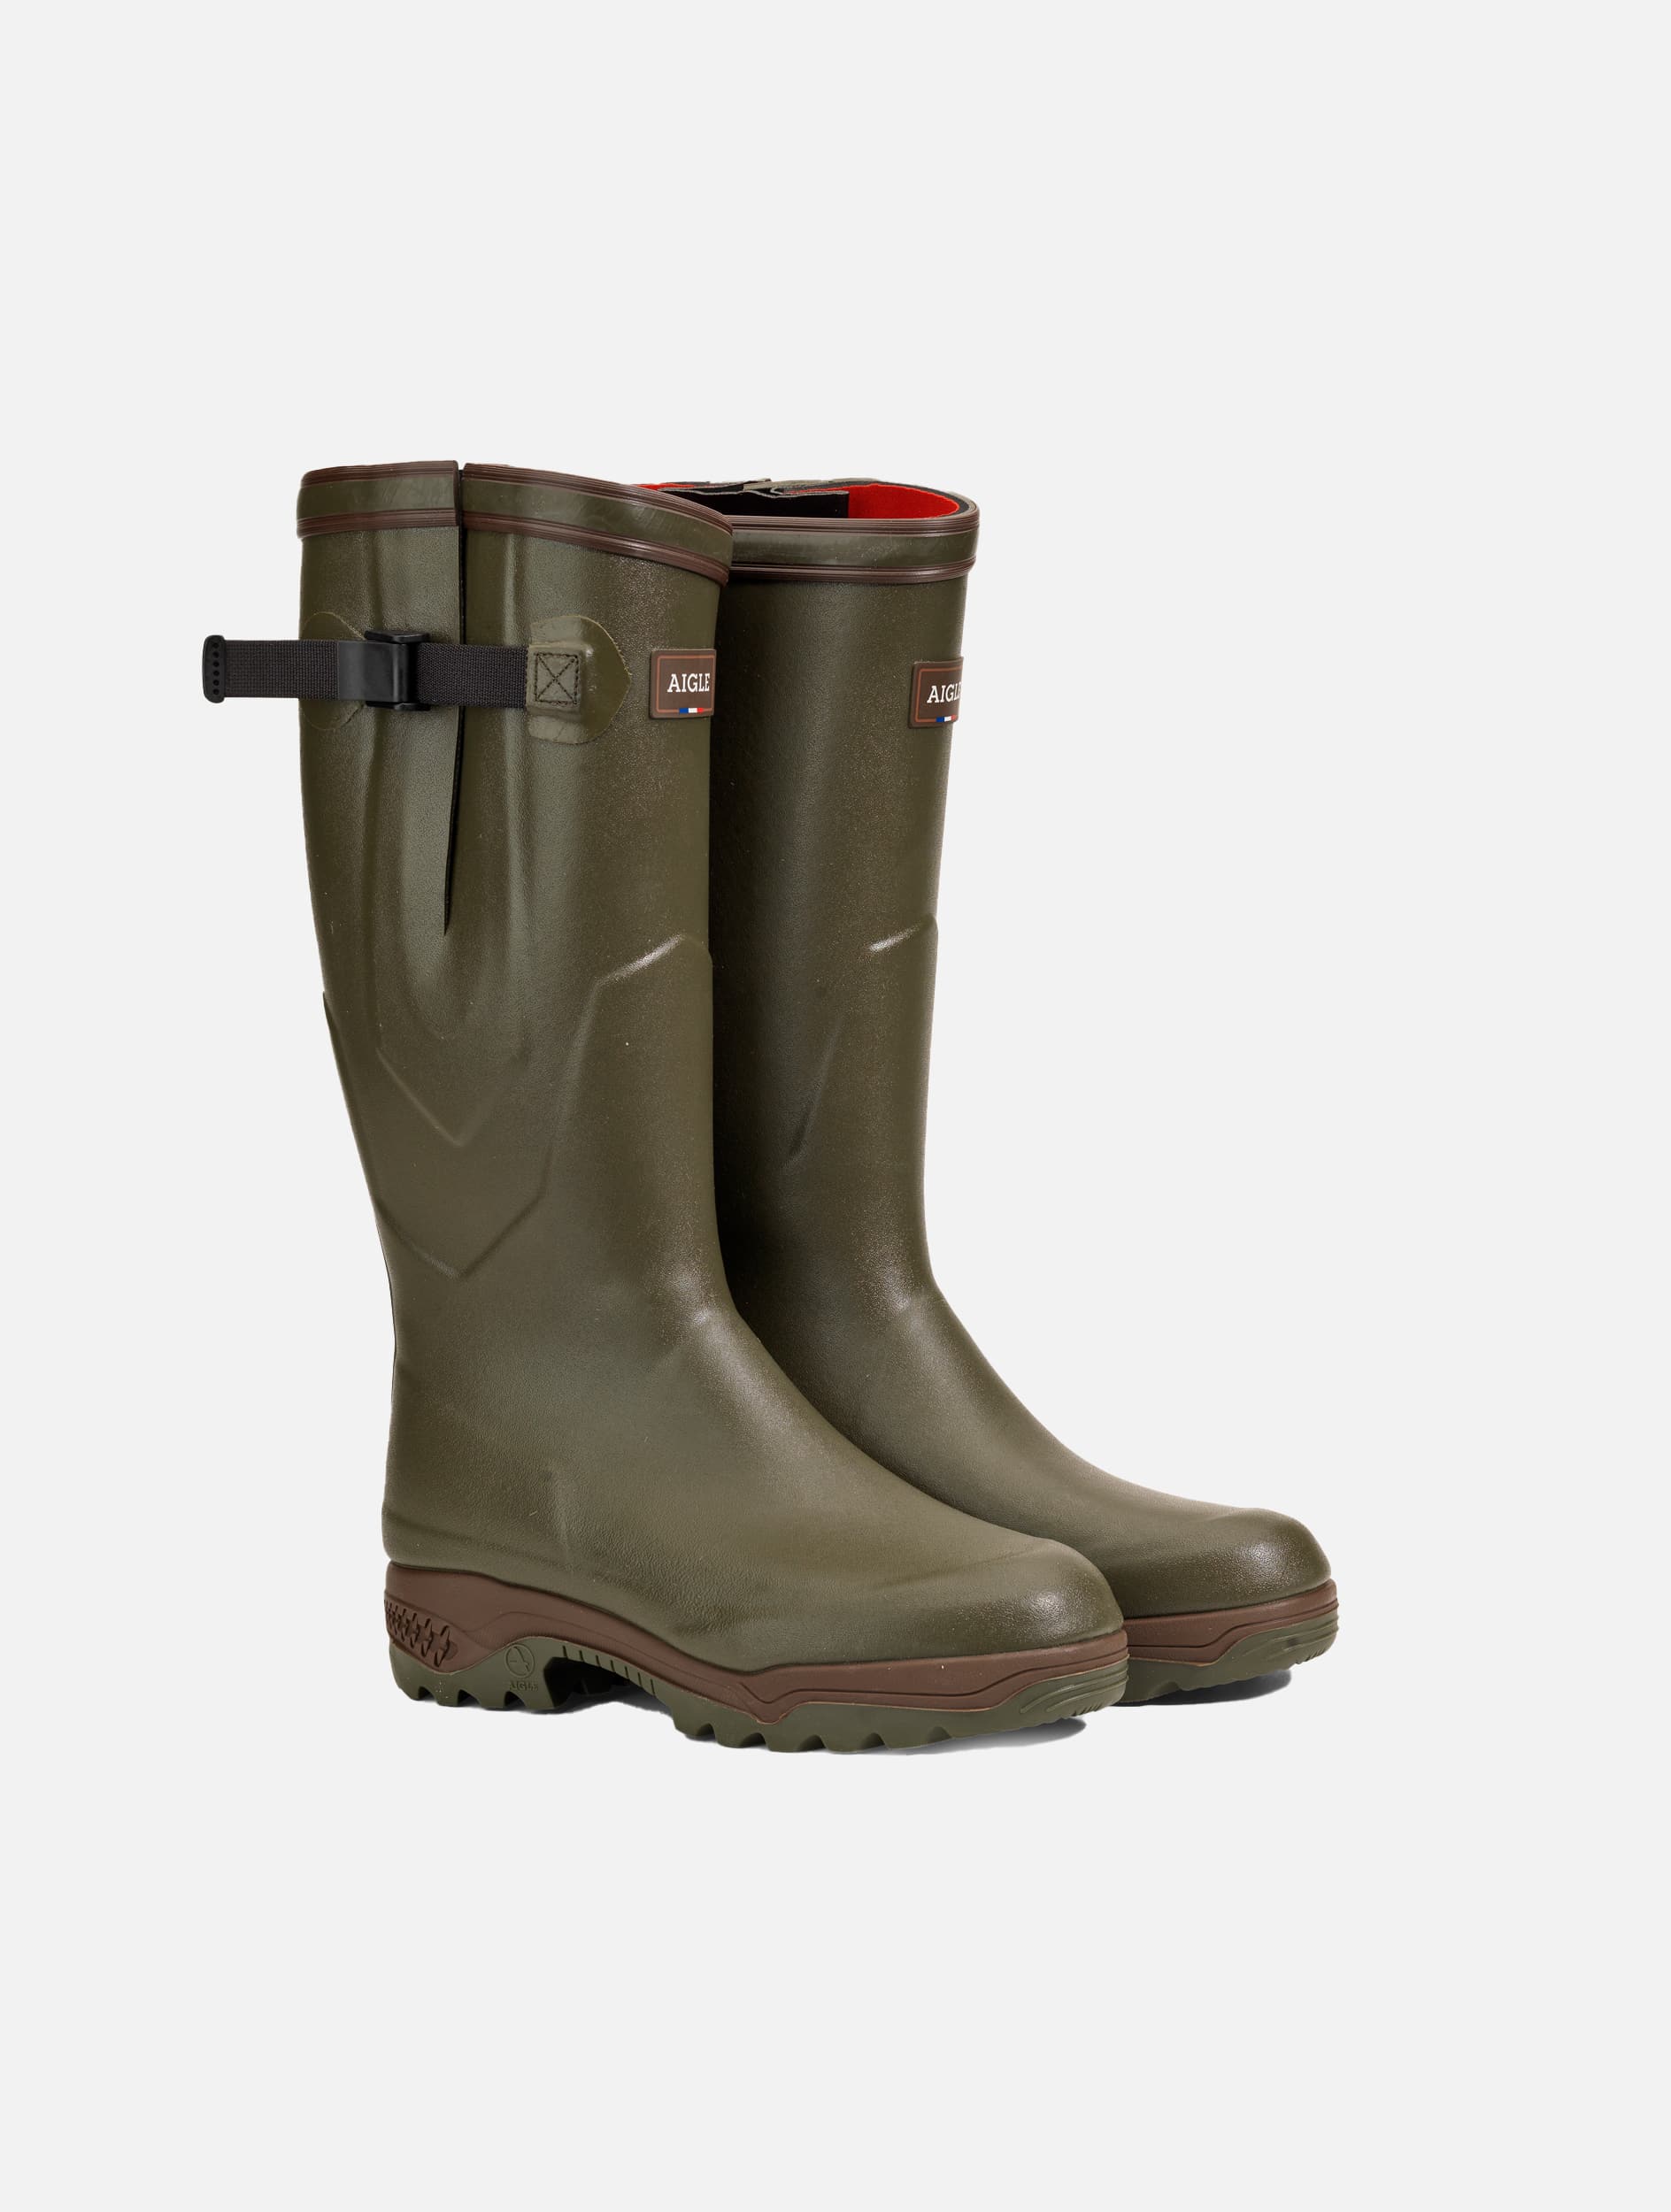 Aigle Iso Neoprene Lined Wellington Boots | Country Ways